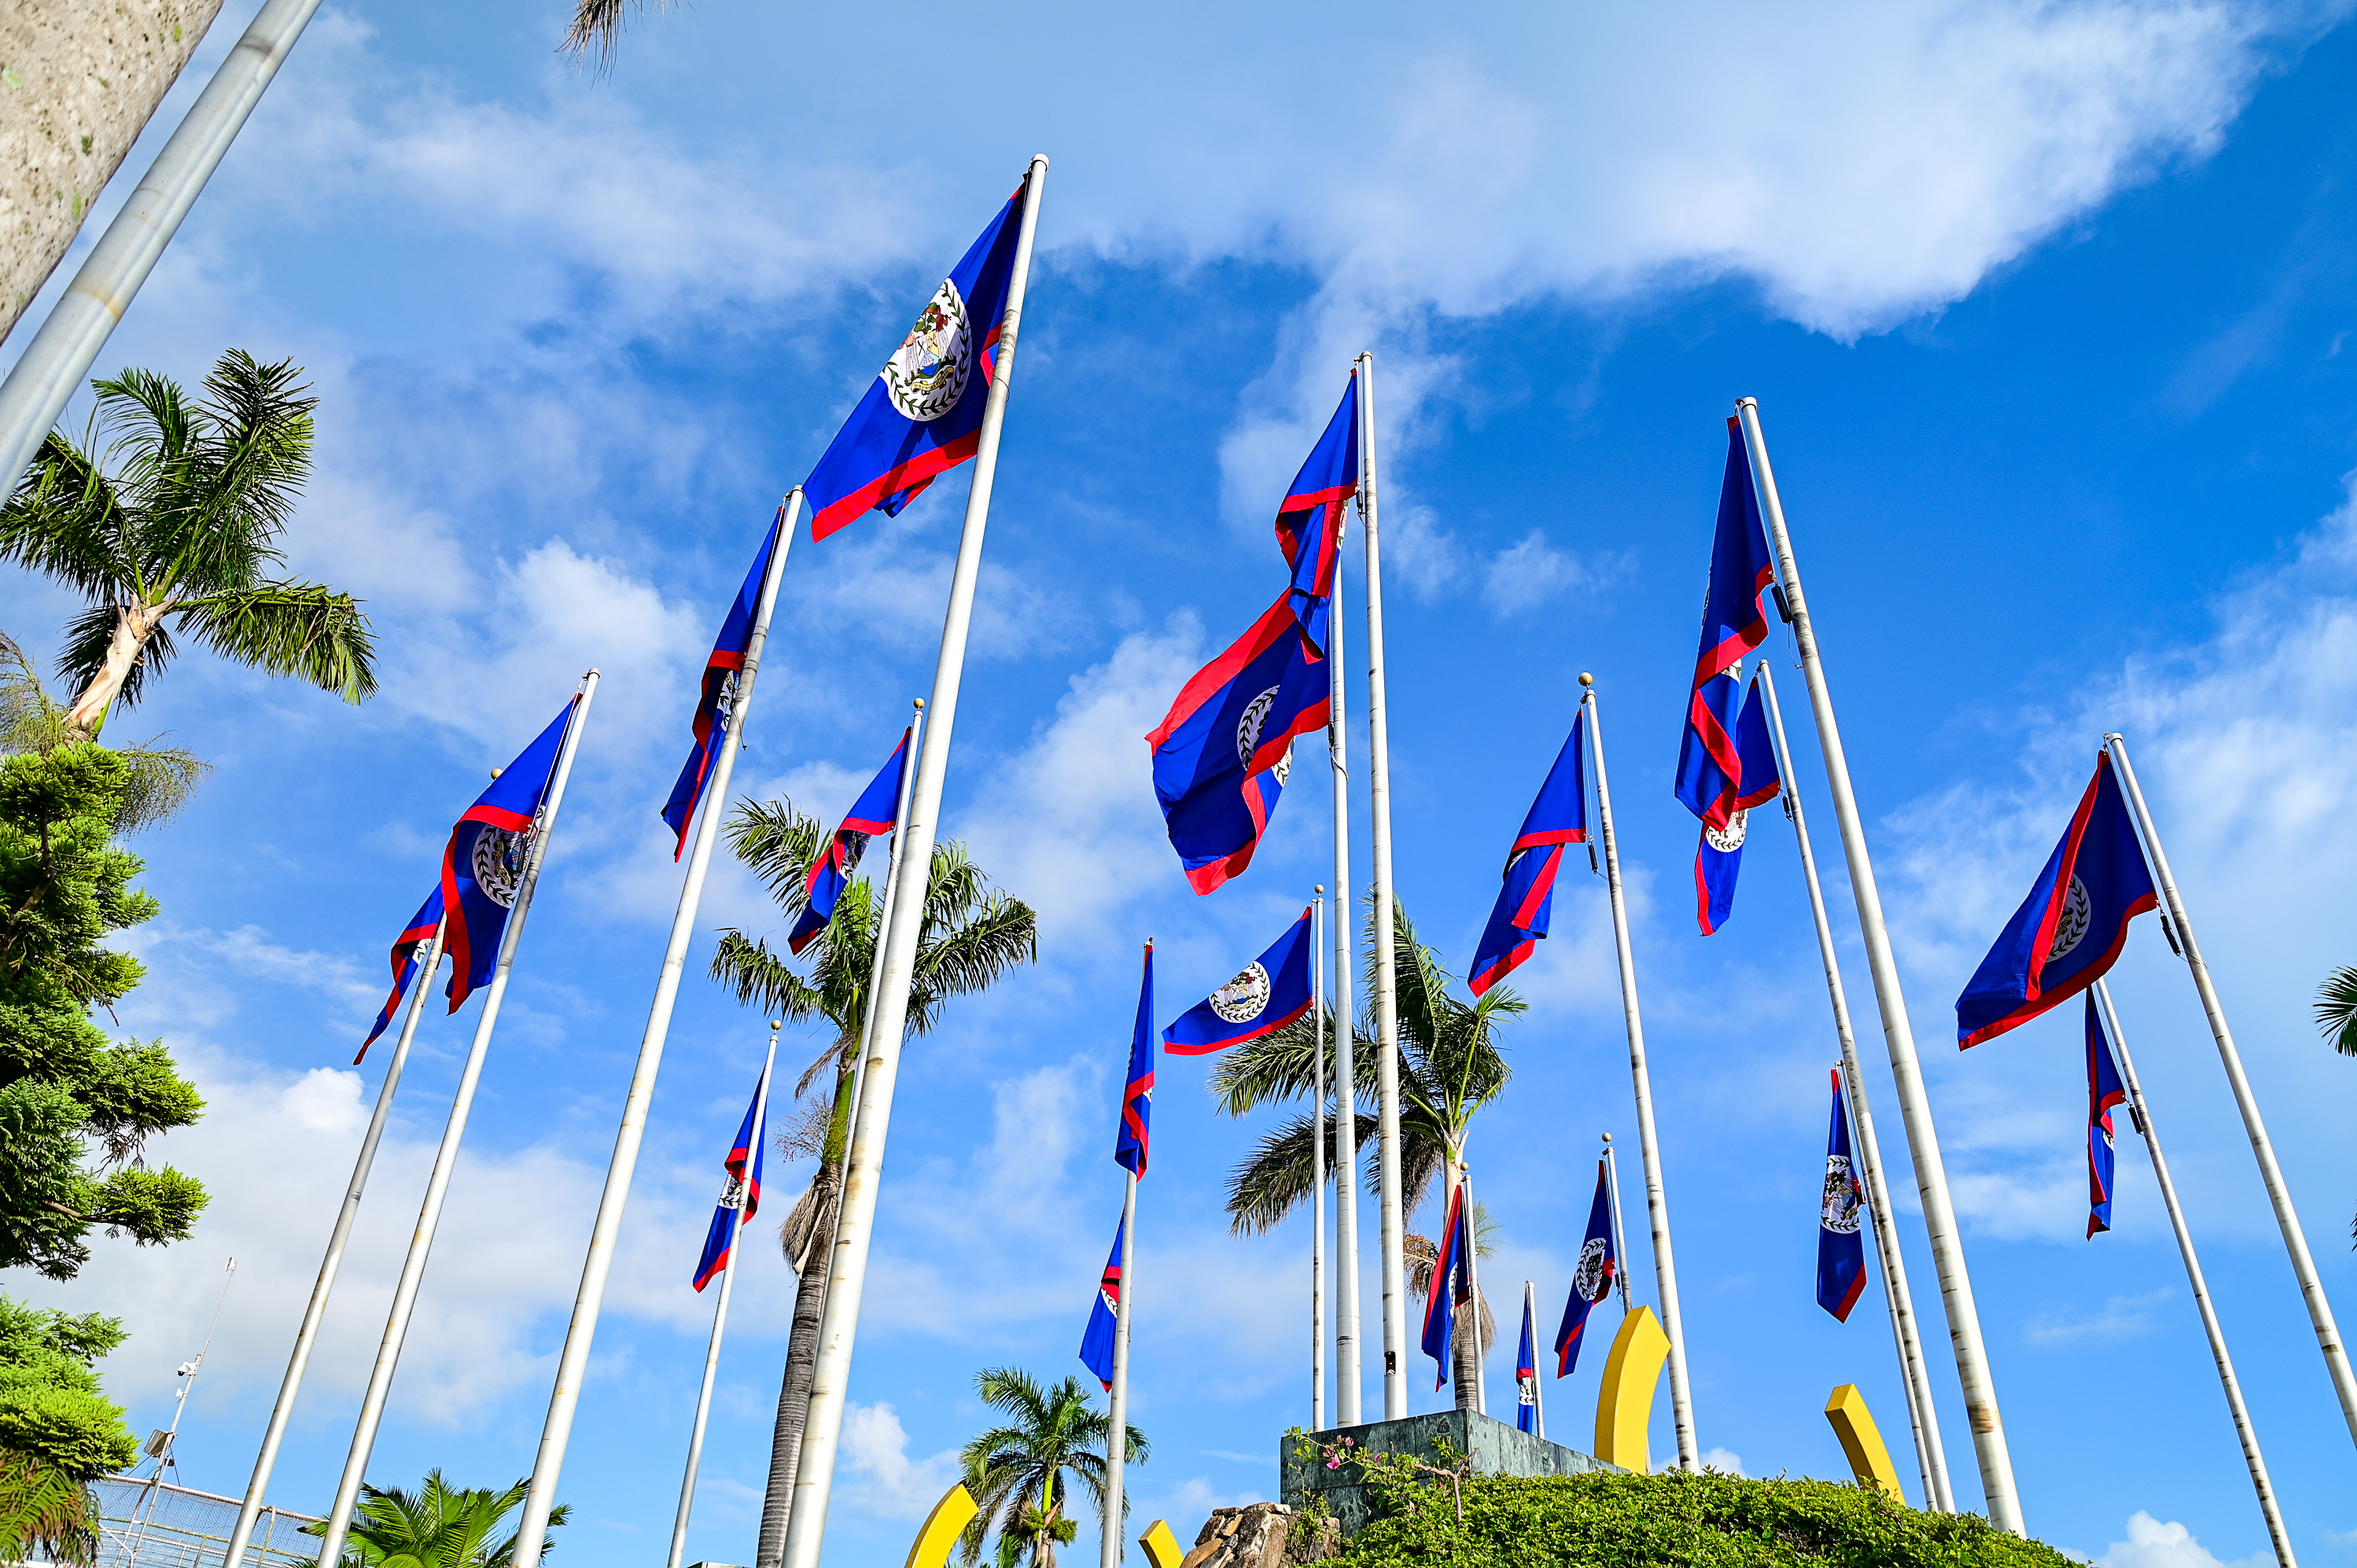 Belize City - Flag Raising Ceremony